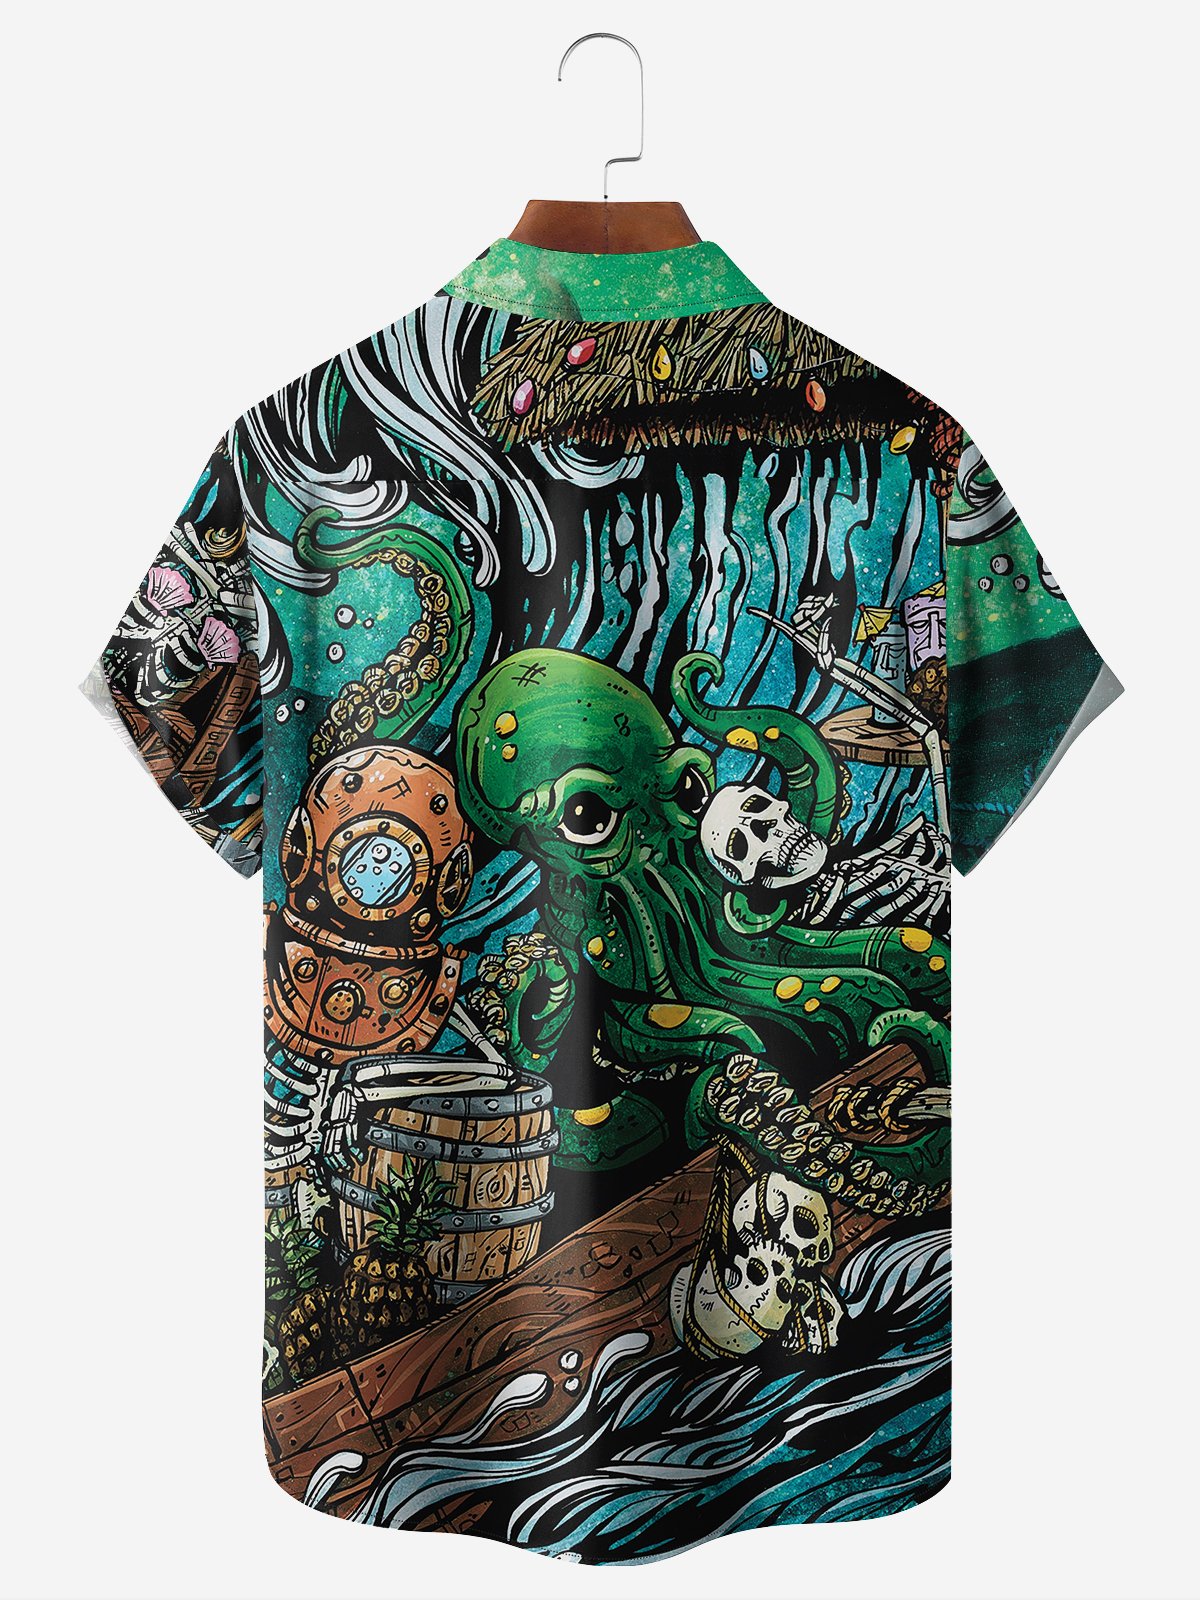 Octopus Adventure Shirt By David Lozeau